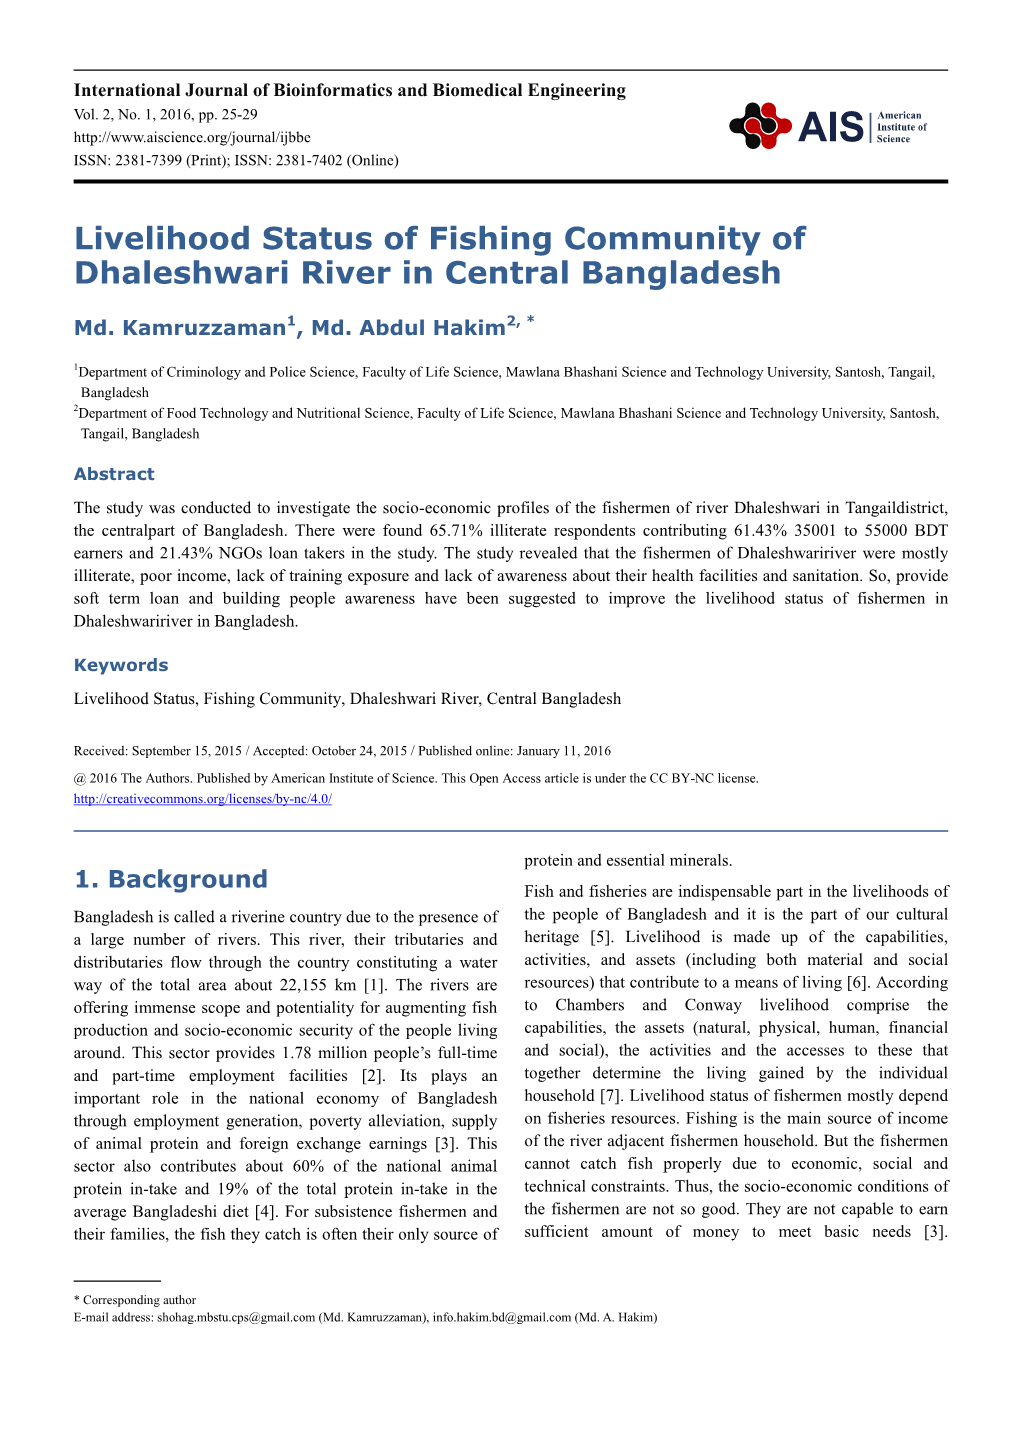 Livelihood Status of Fishing Community of Dhaleshwari River in Central Bangladesh